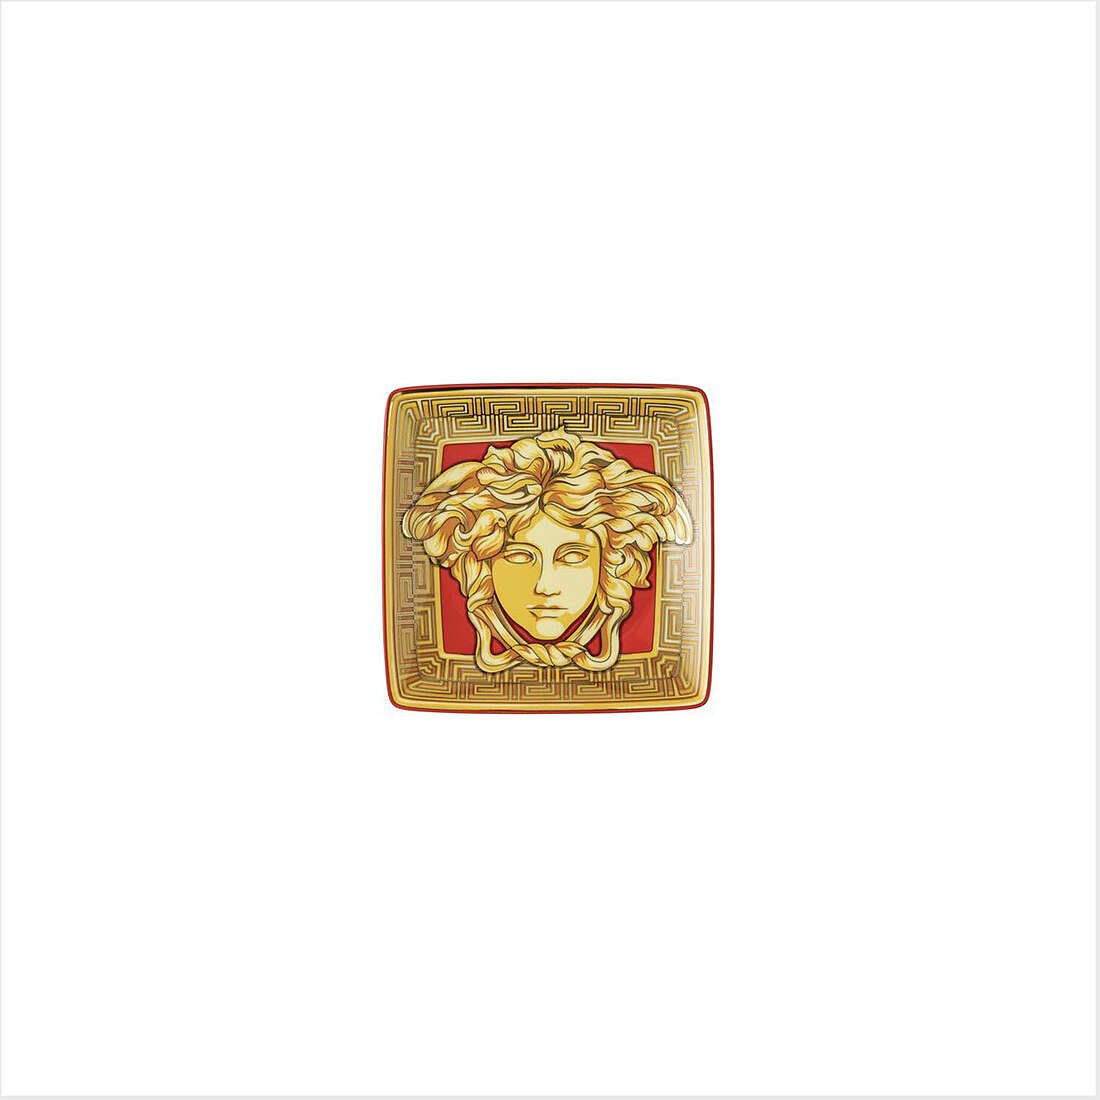 Ciotola Versace Medusa Amplified colore Rosso, Oro 11940-409956-15253